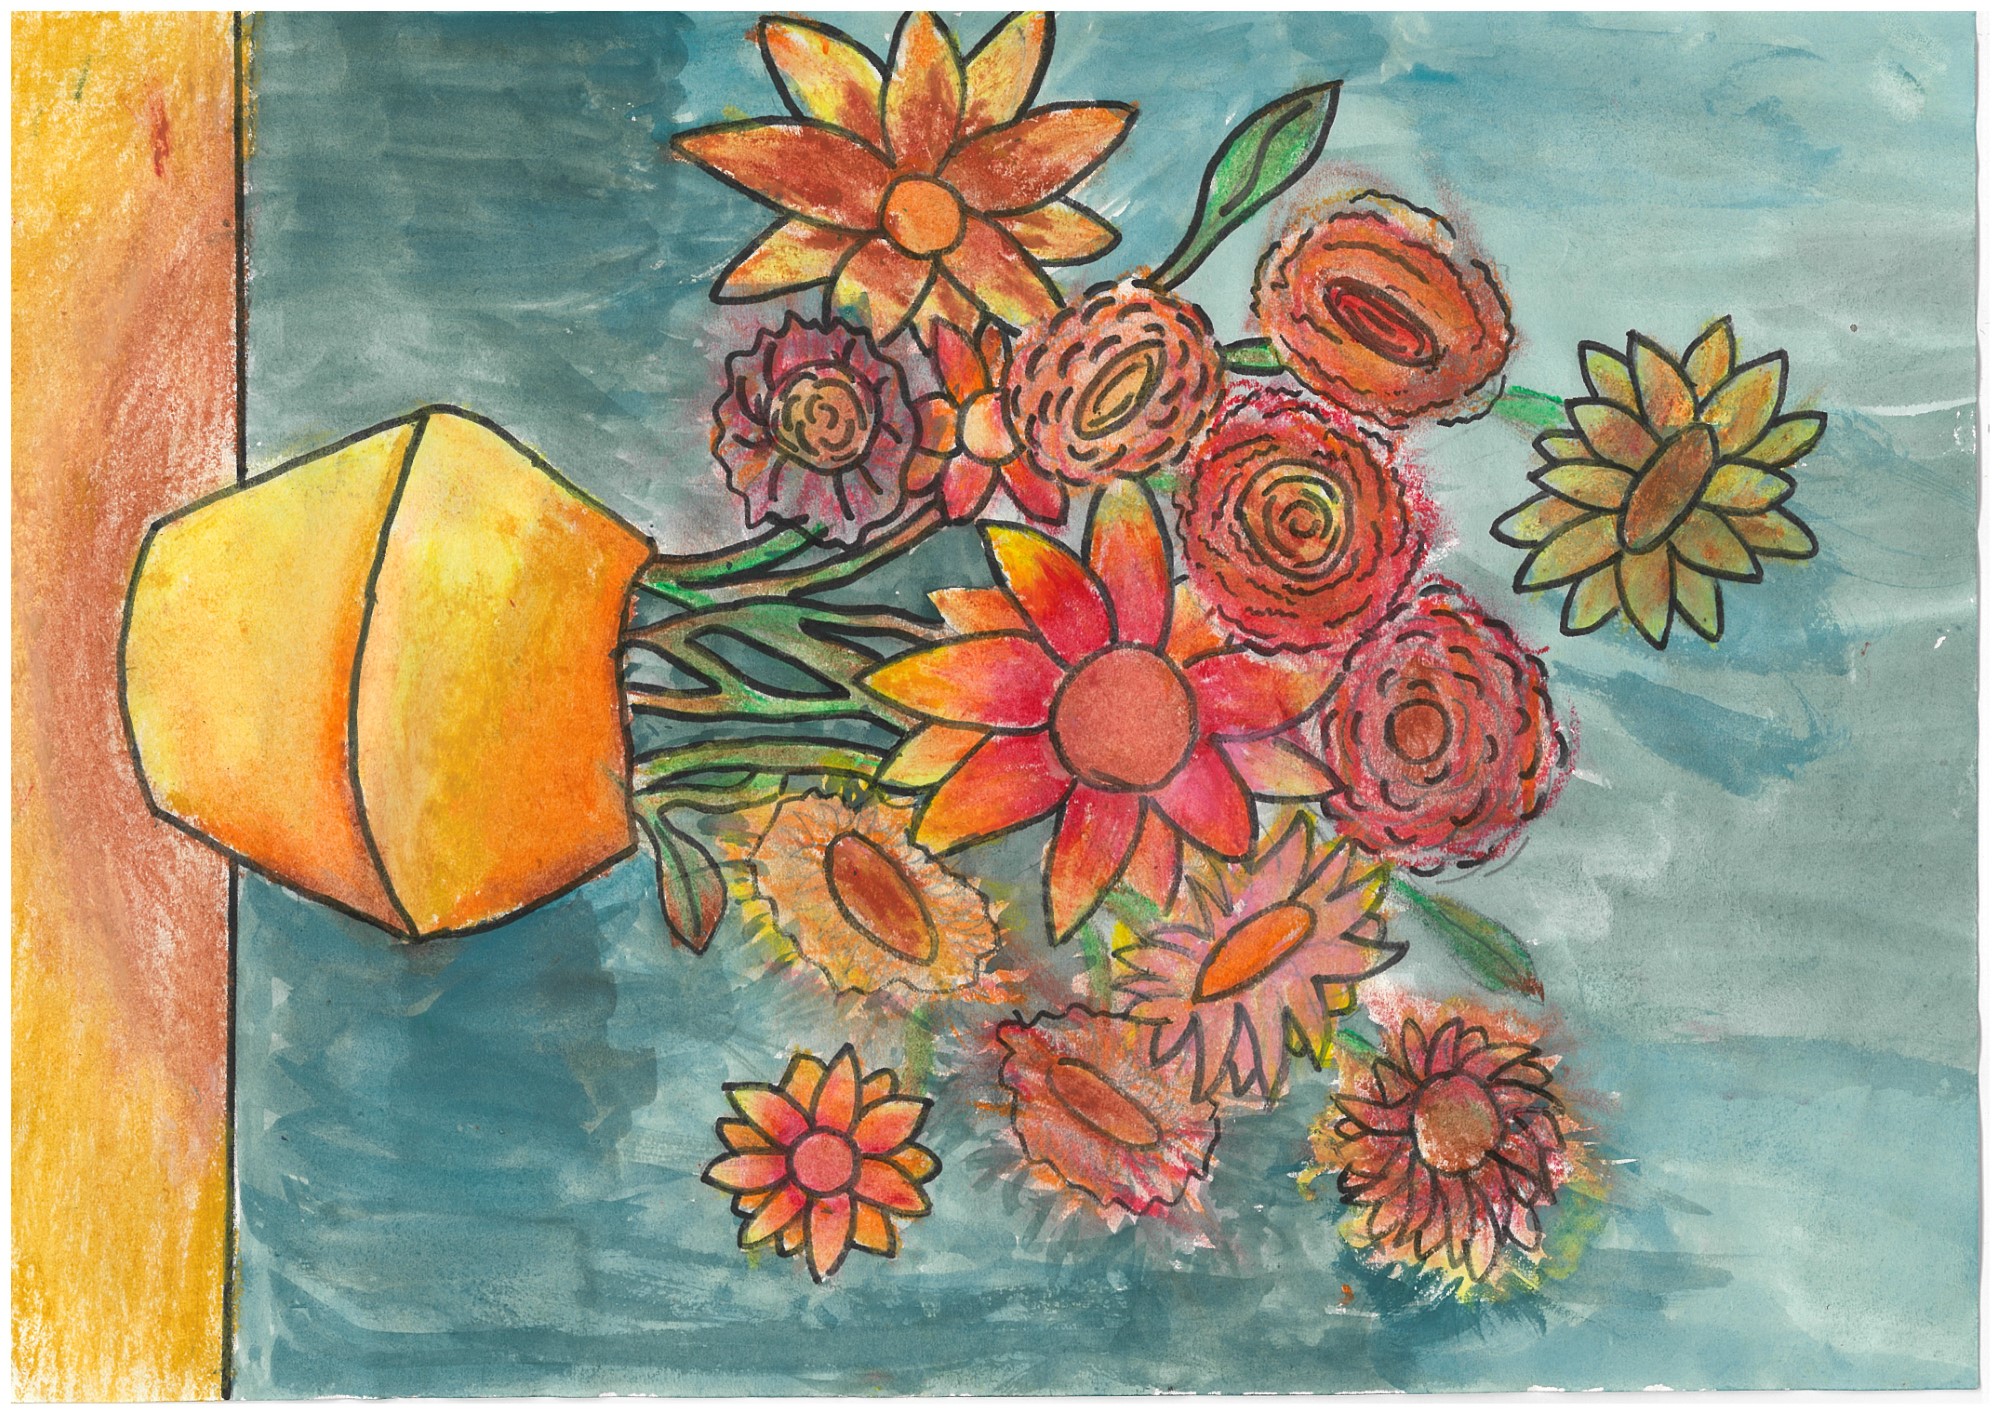 student artwork - Still life flowers